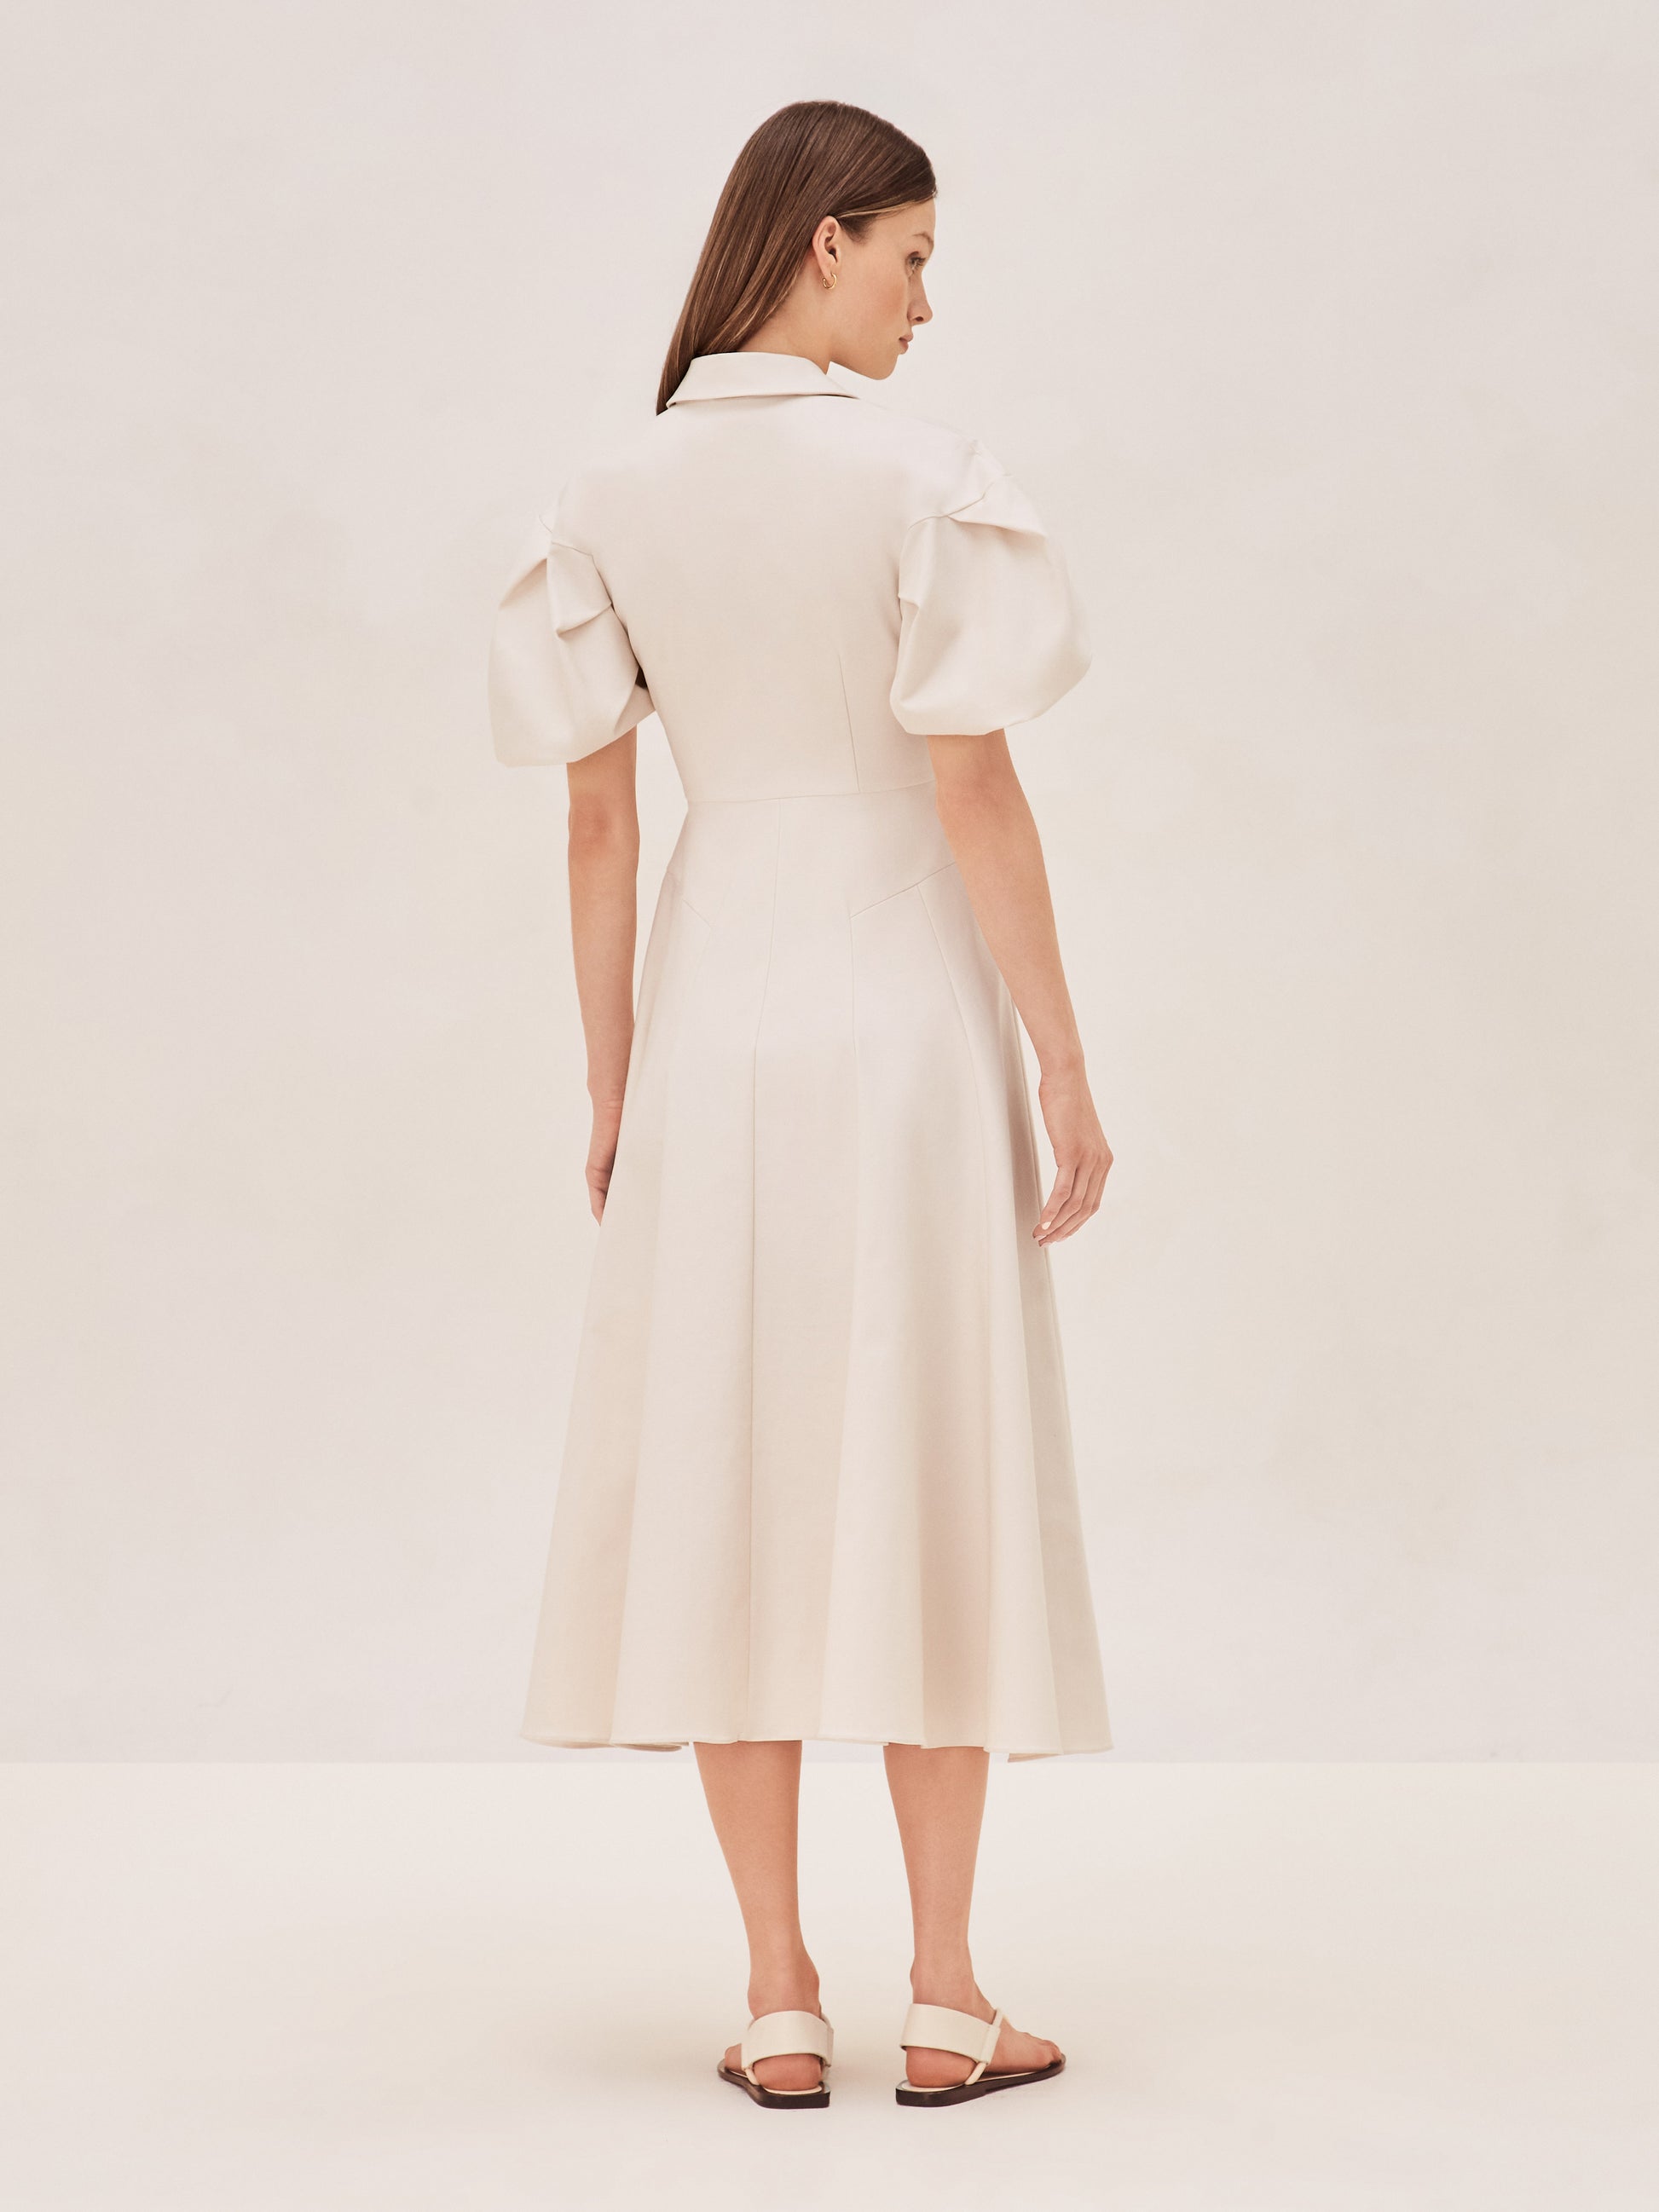 Alexis Amilya Midi Dress in cream back image